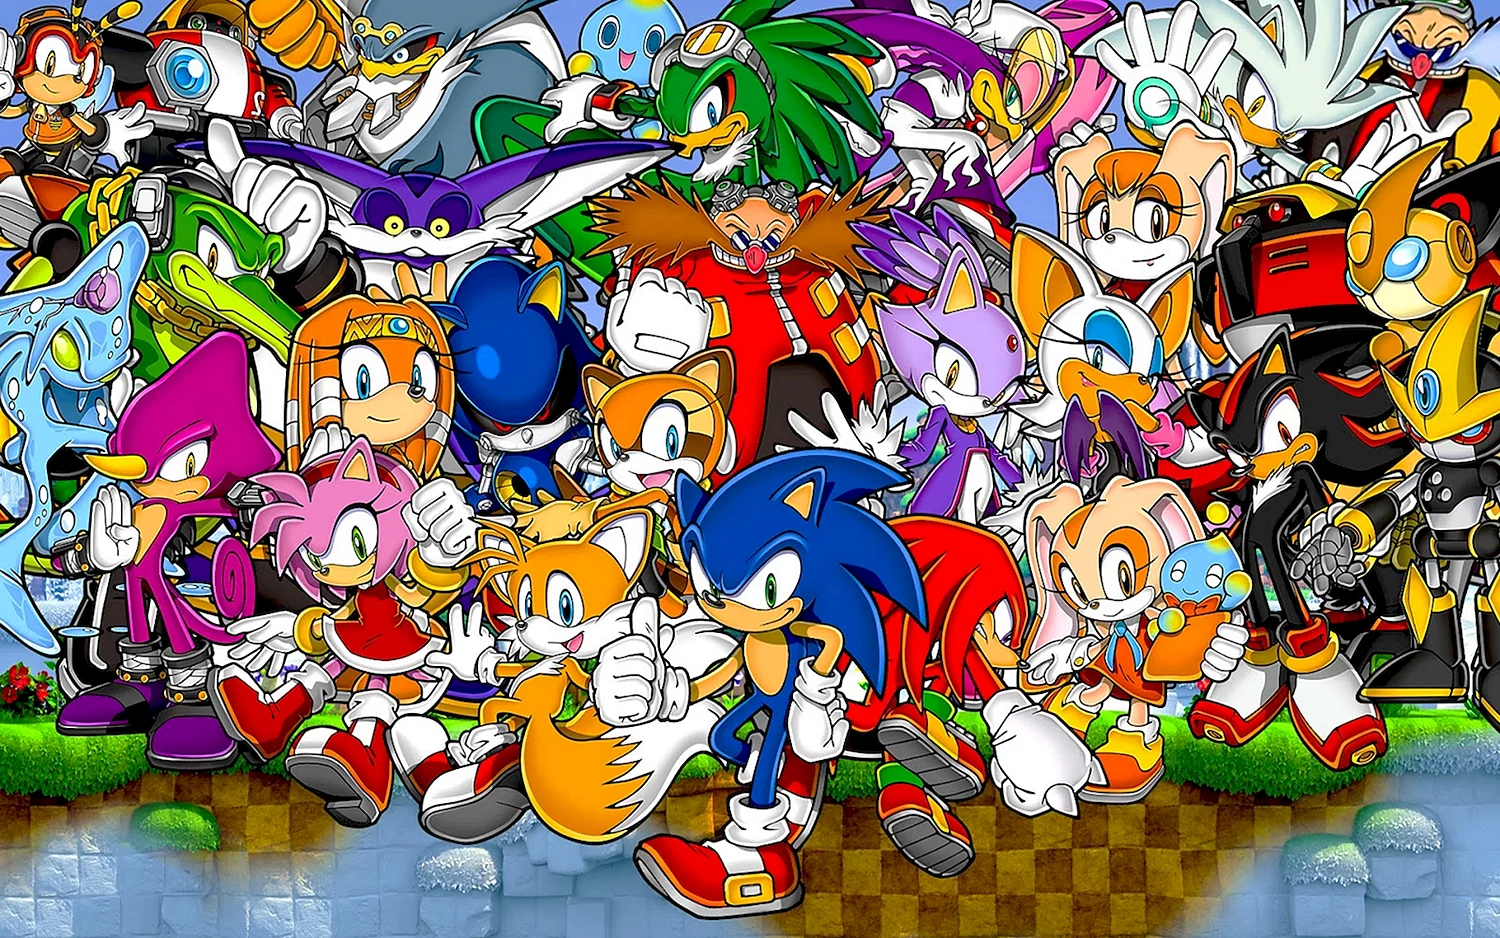 Sonic the Hedgehog серия